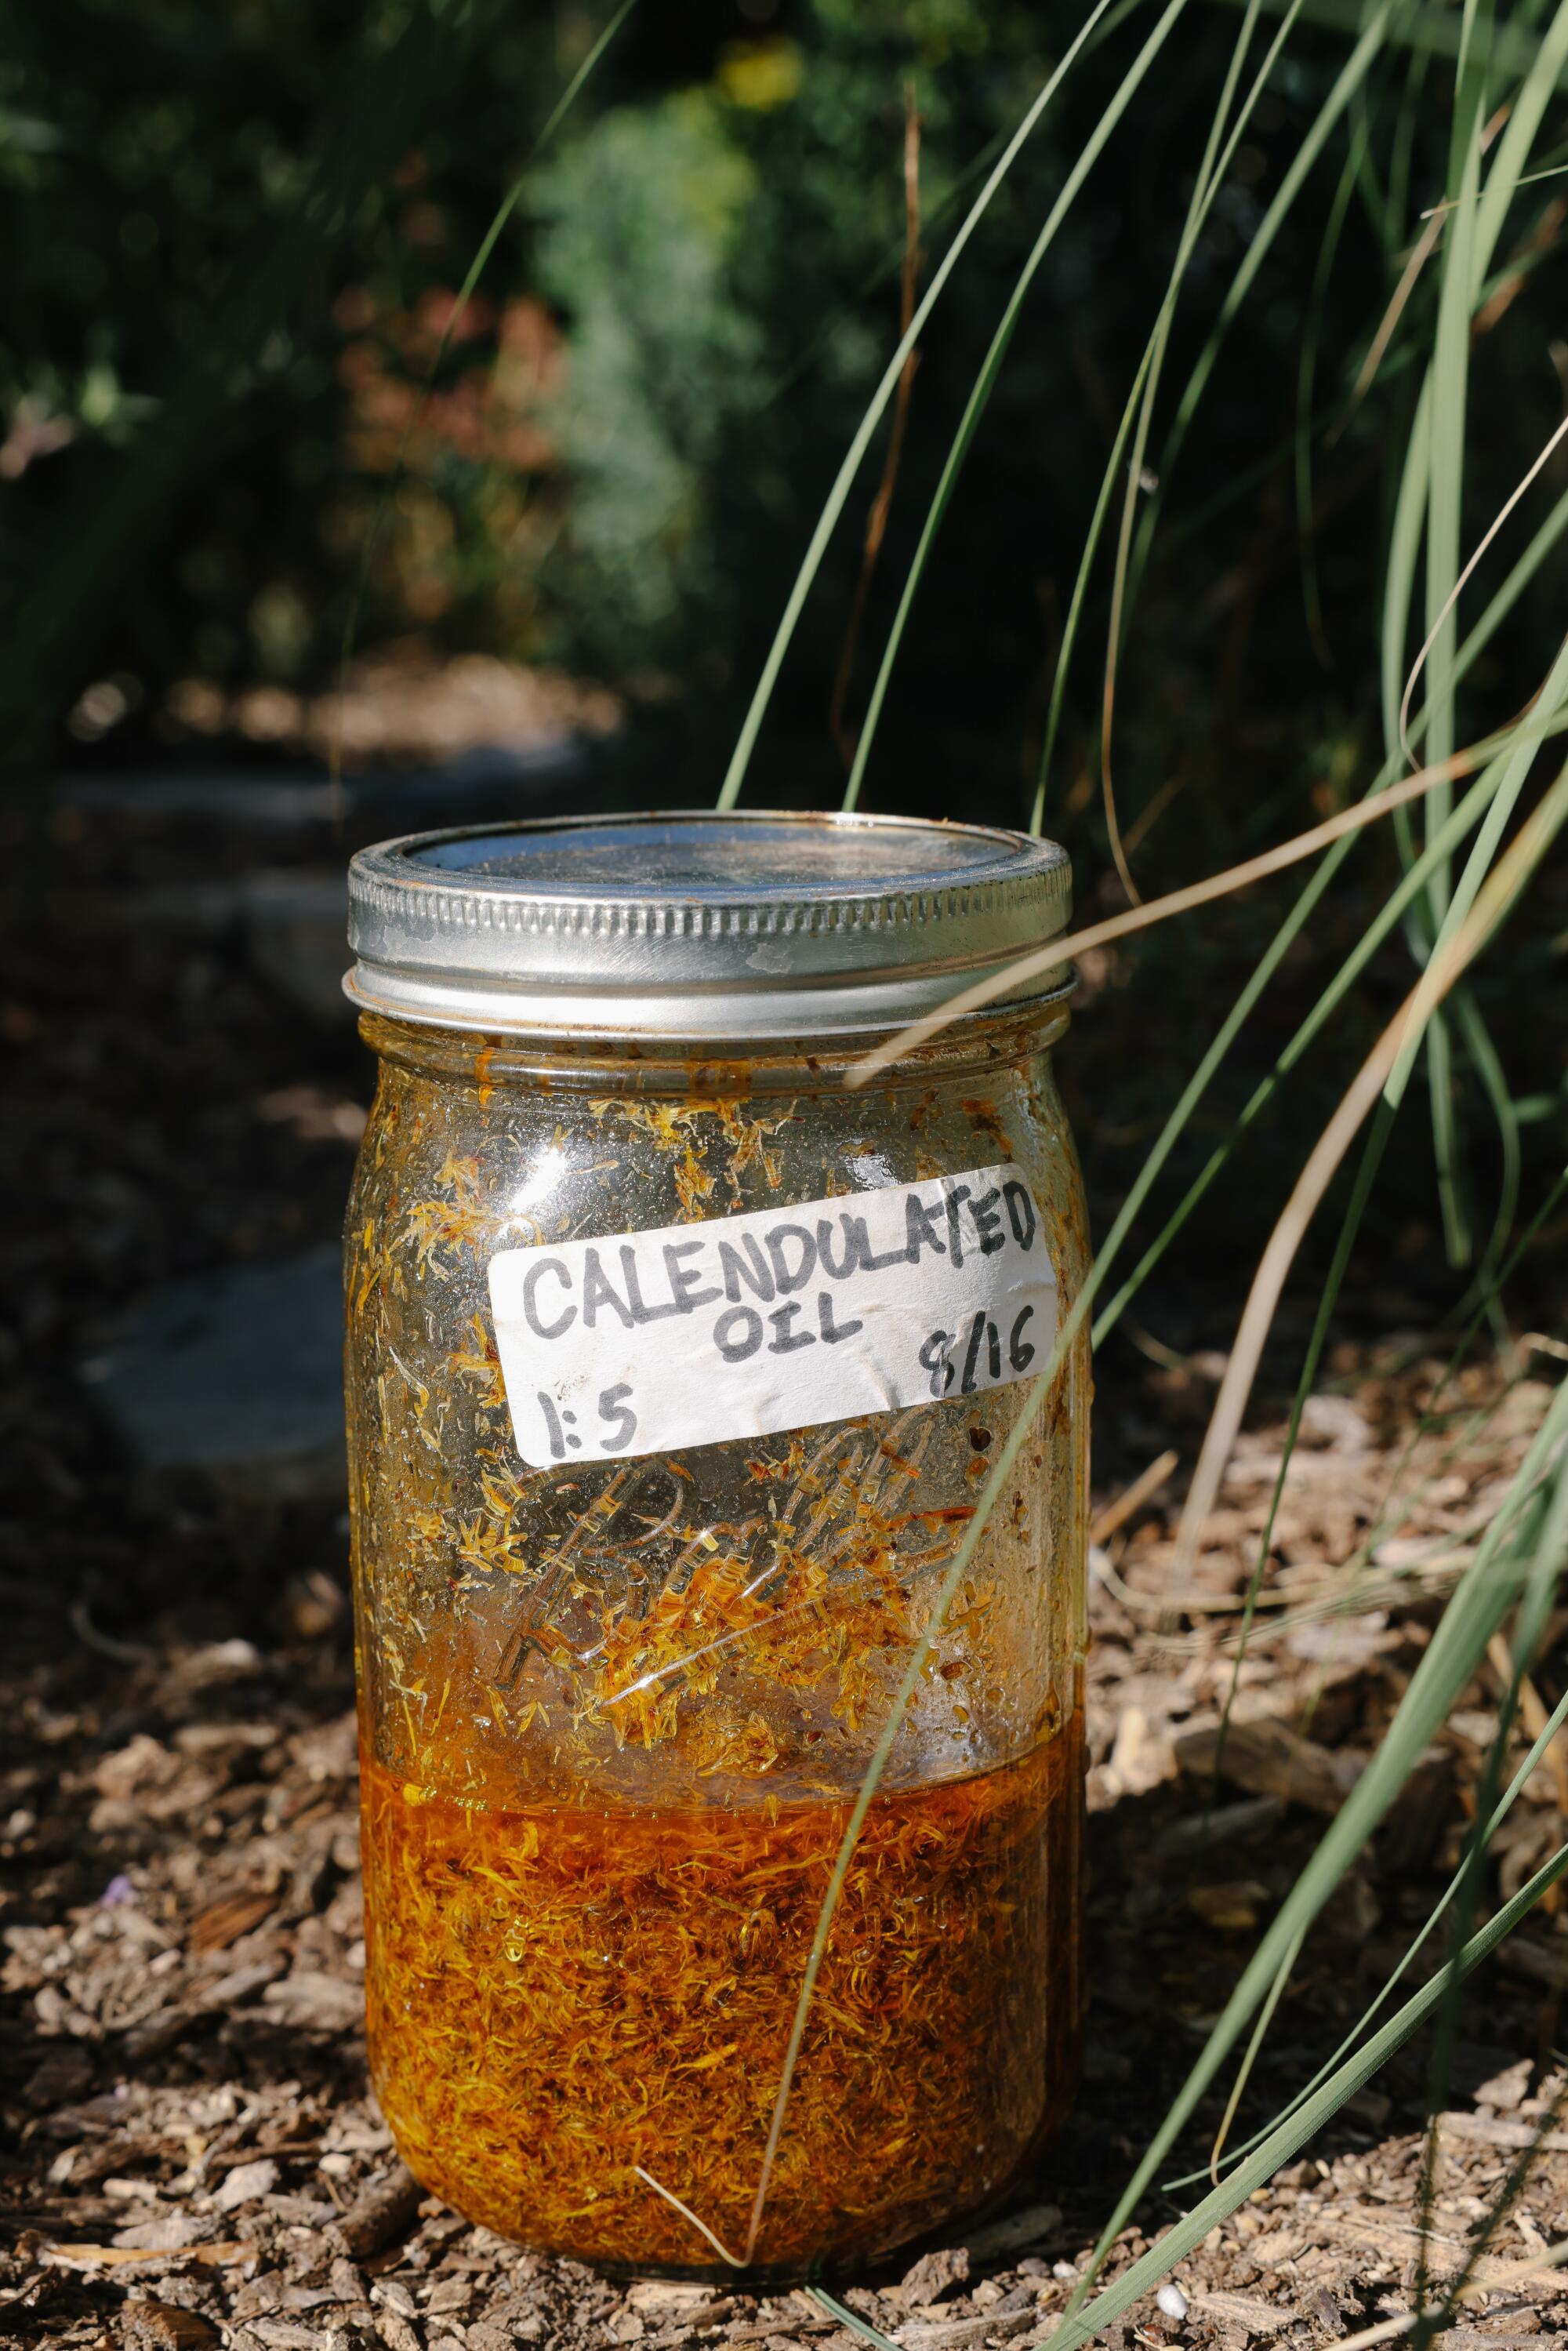 A glass jar labeled calendula oil sits outside baking in the sun